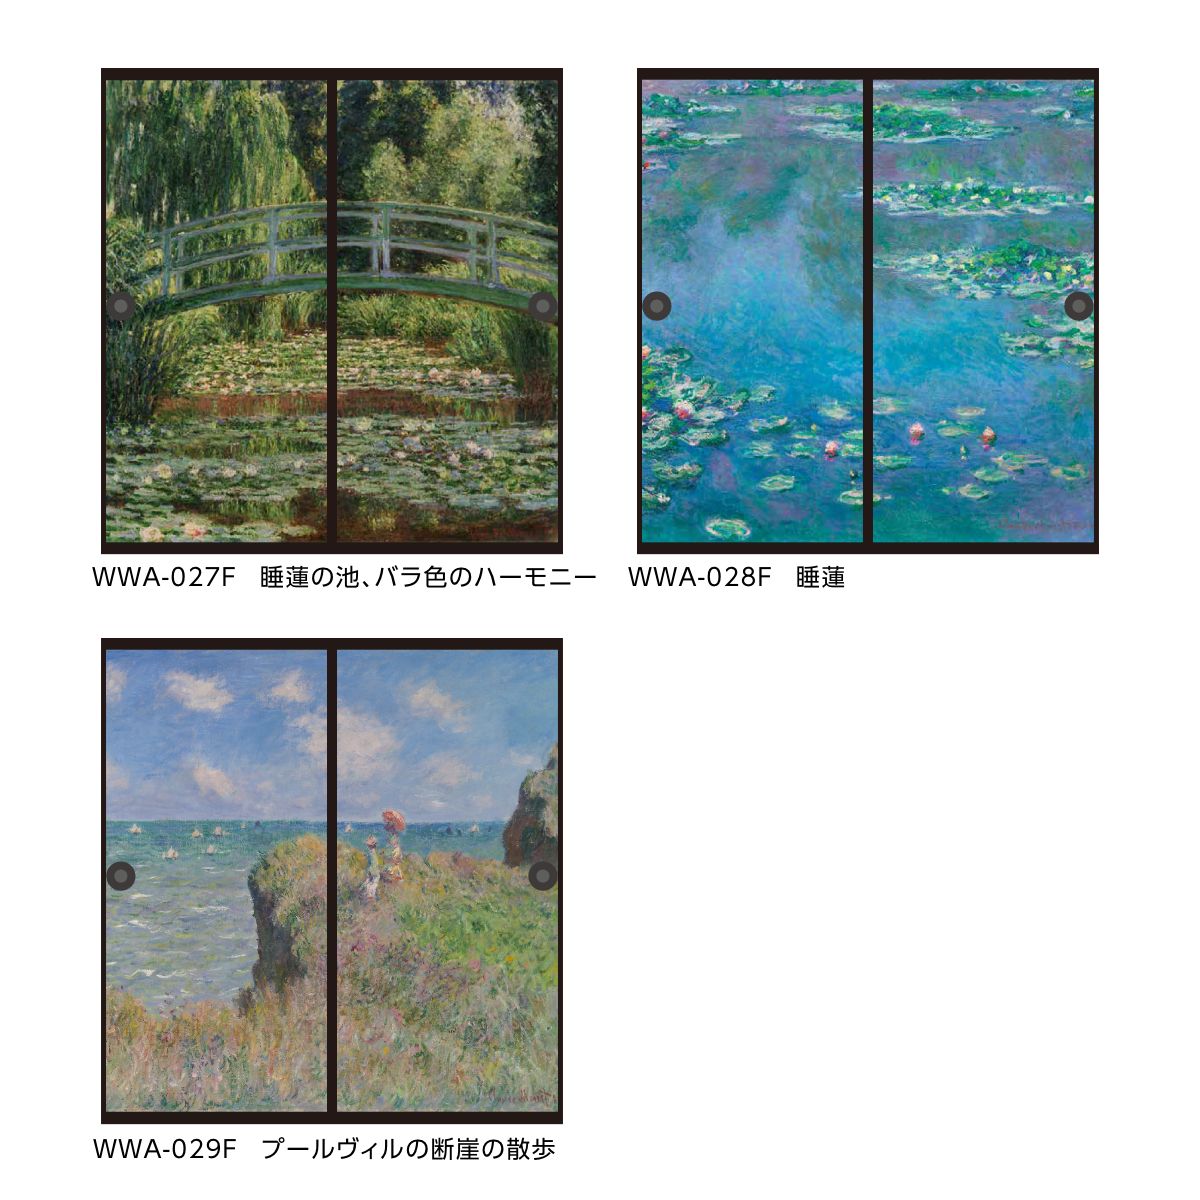 World Famous Painting Fusuma Paper Monet Water Lily Pond, Rose Harmony Set of 2 Water Paste Type Width 91cm x Length 182cm Fusuma Paper Asahipen WWA-027F